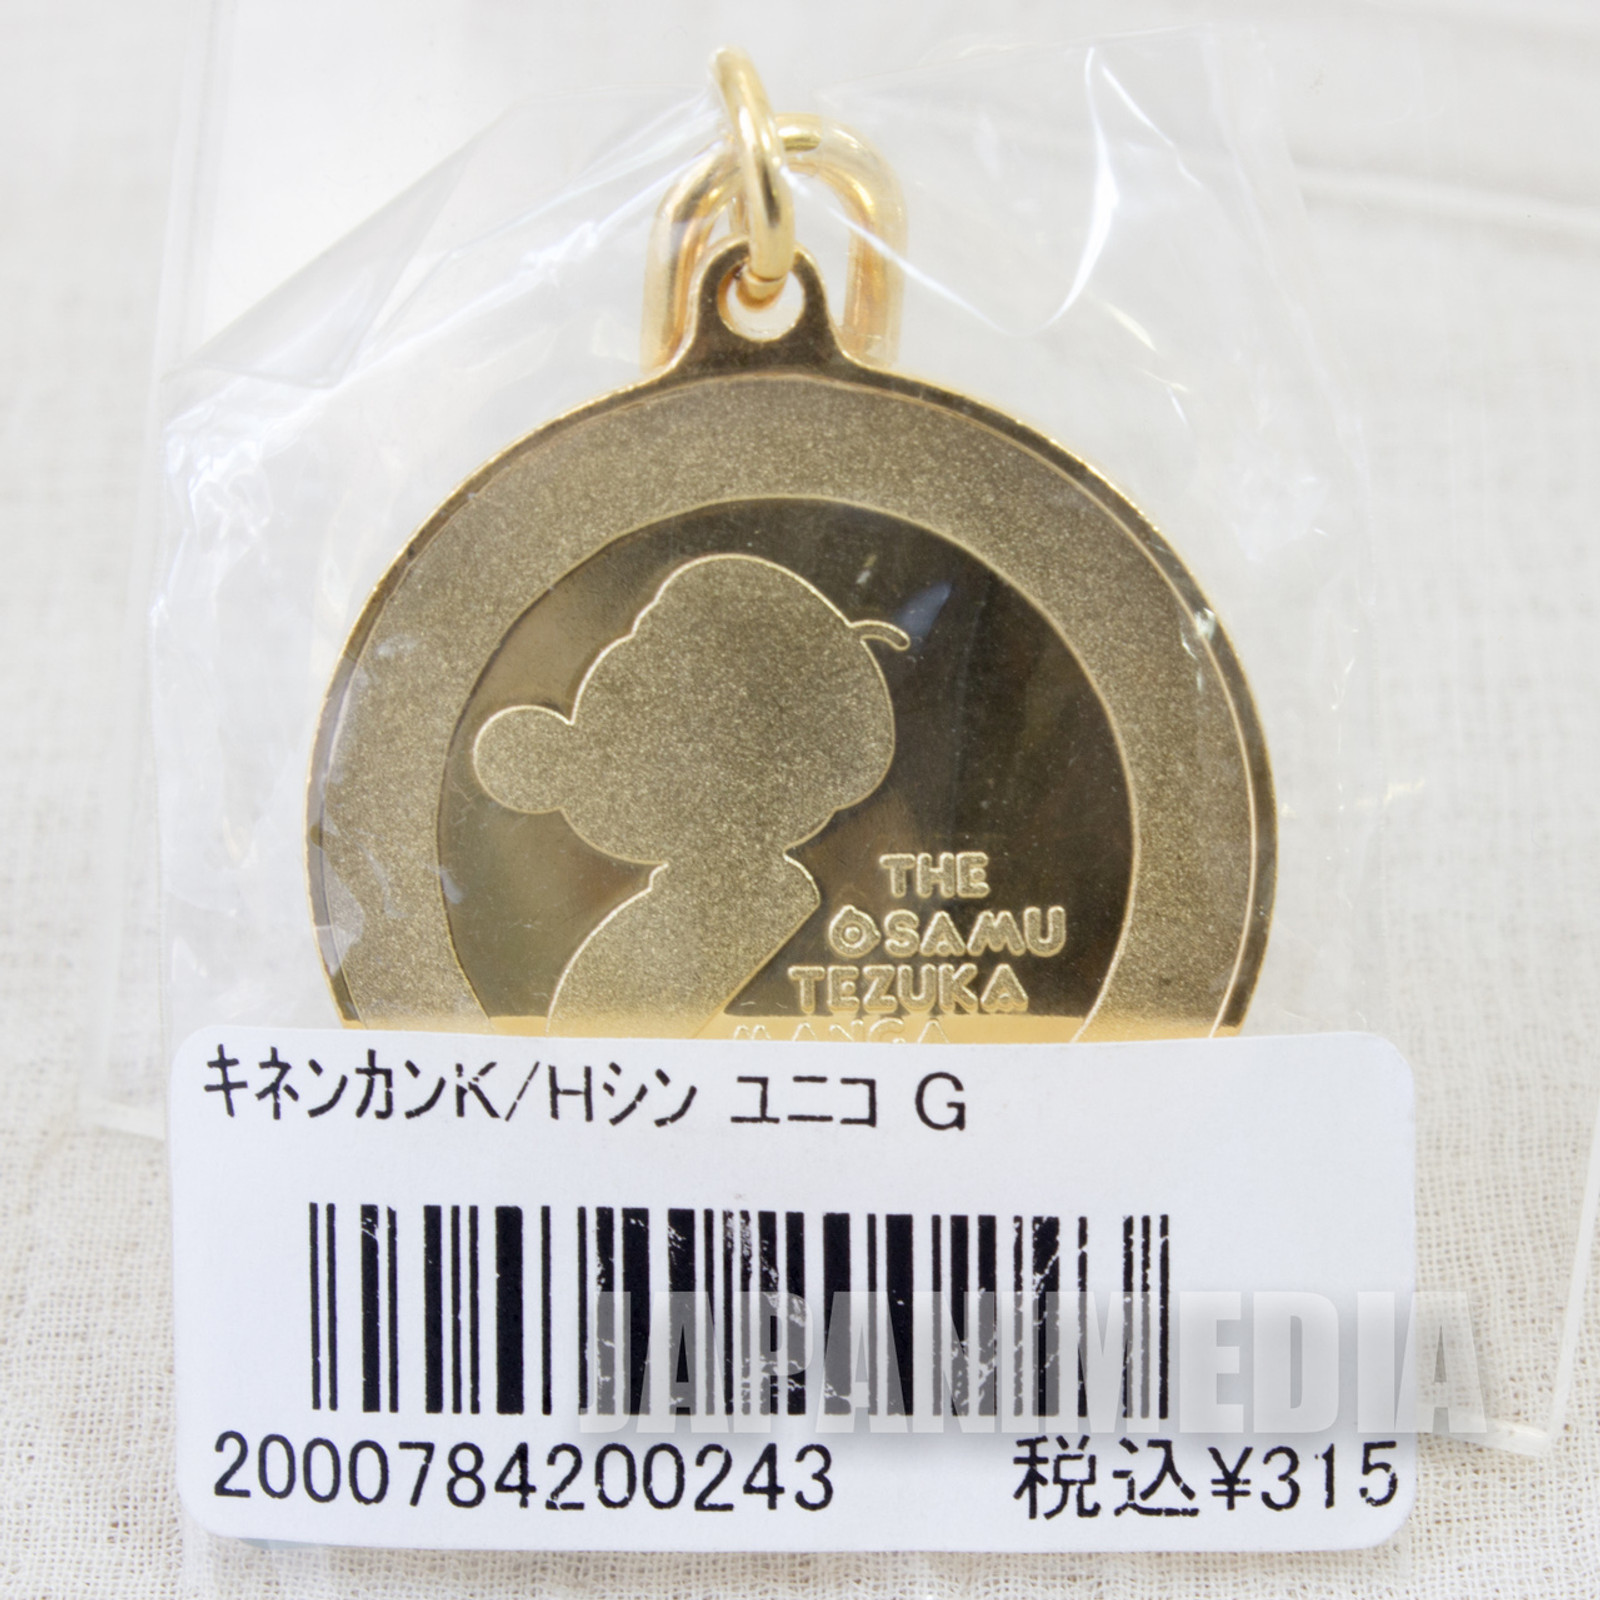 Unico Osamu Tezuka MANGA MUSEUM Key Chain JAPAN ANIME MANGA